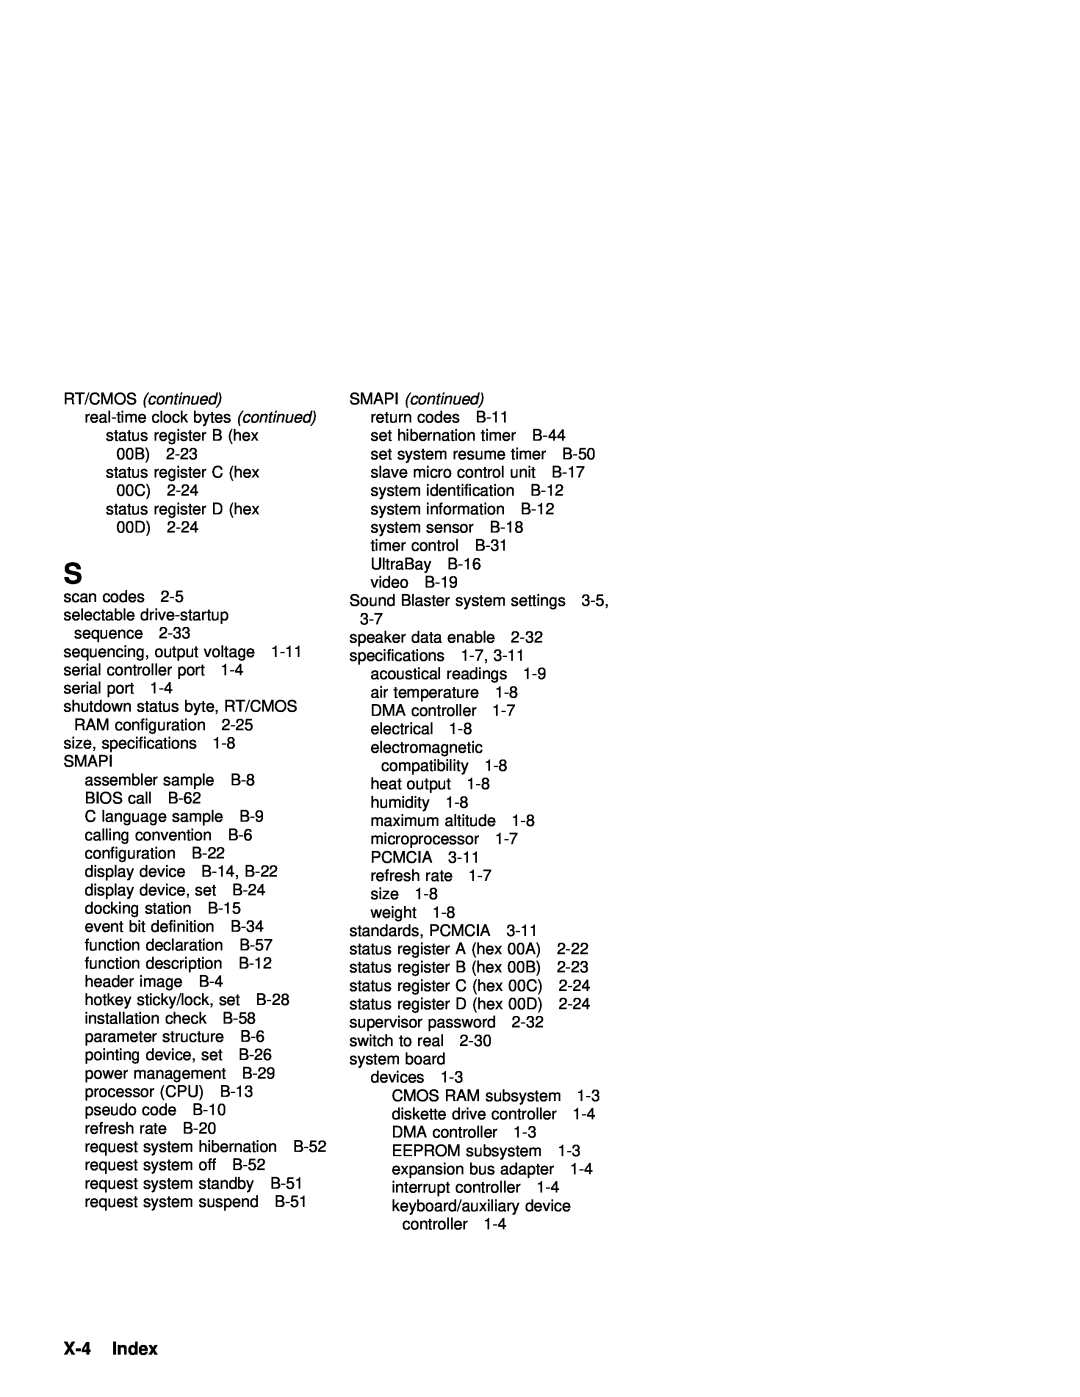 IBM 770 manual X-4 Index 